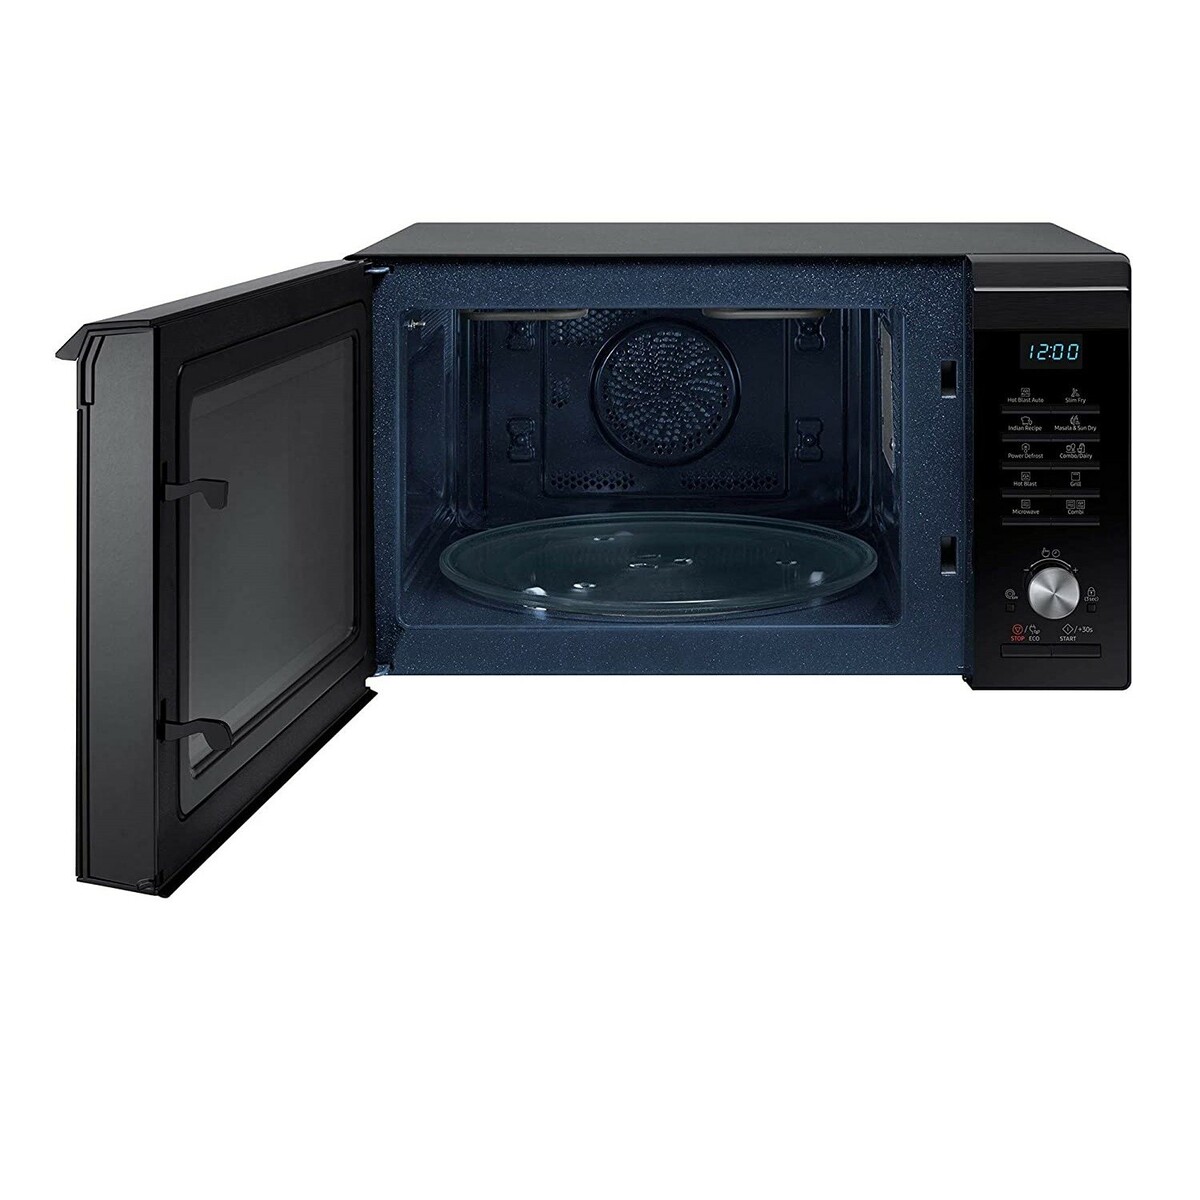 Samsung Microwave Oven MC28M6036CB 28Ltr